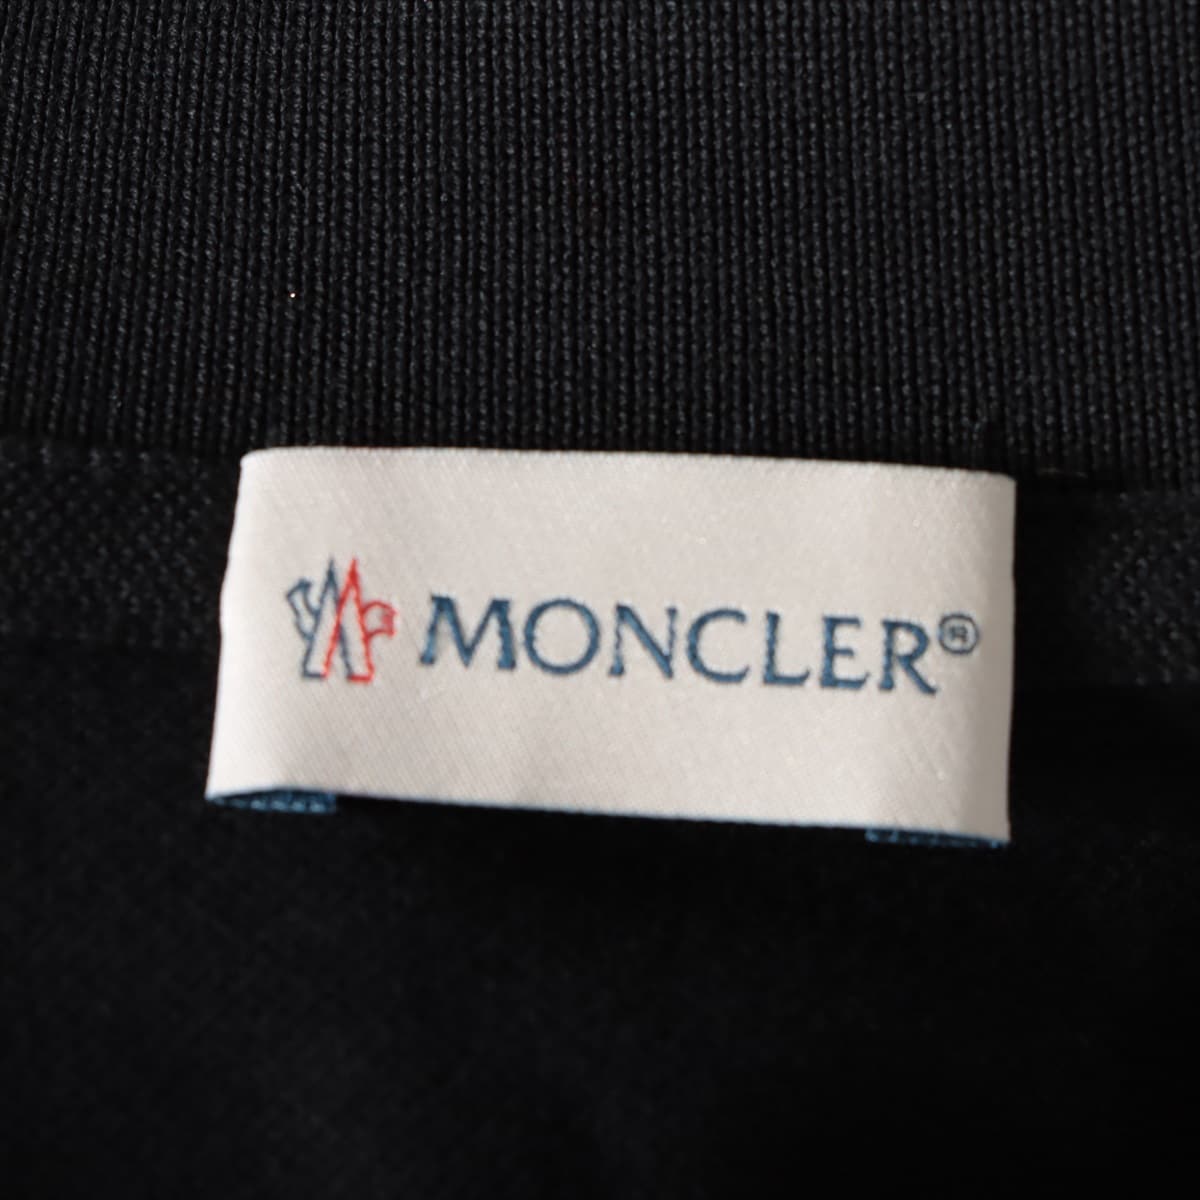 Moncler Genius Craig Green 18 years Cotton Long T shirts S Men's Black  Polo